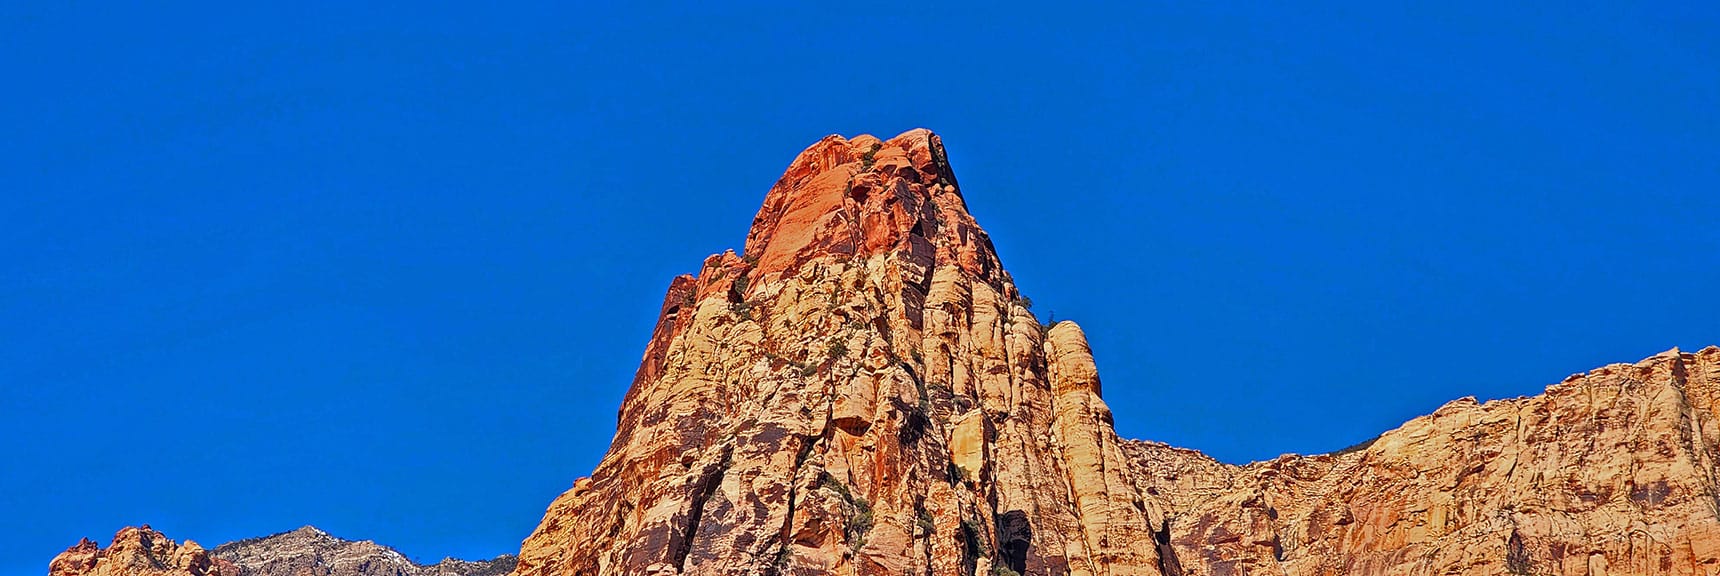 Mescalito Pyramid Summit | Knoll Trail | Red Rock Canyon National Conservation Area, Nevada | David Smith | LasVegasAreaTrails.com